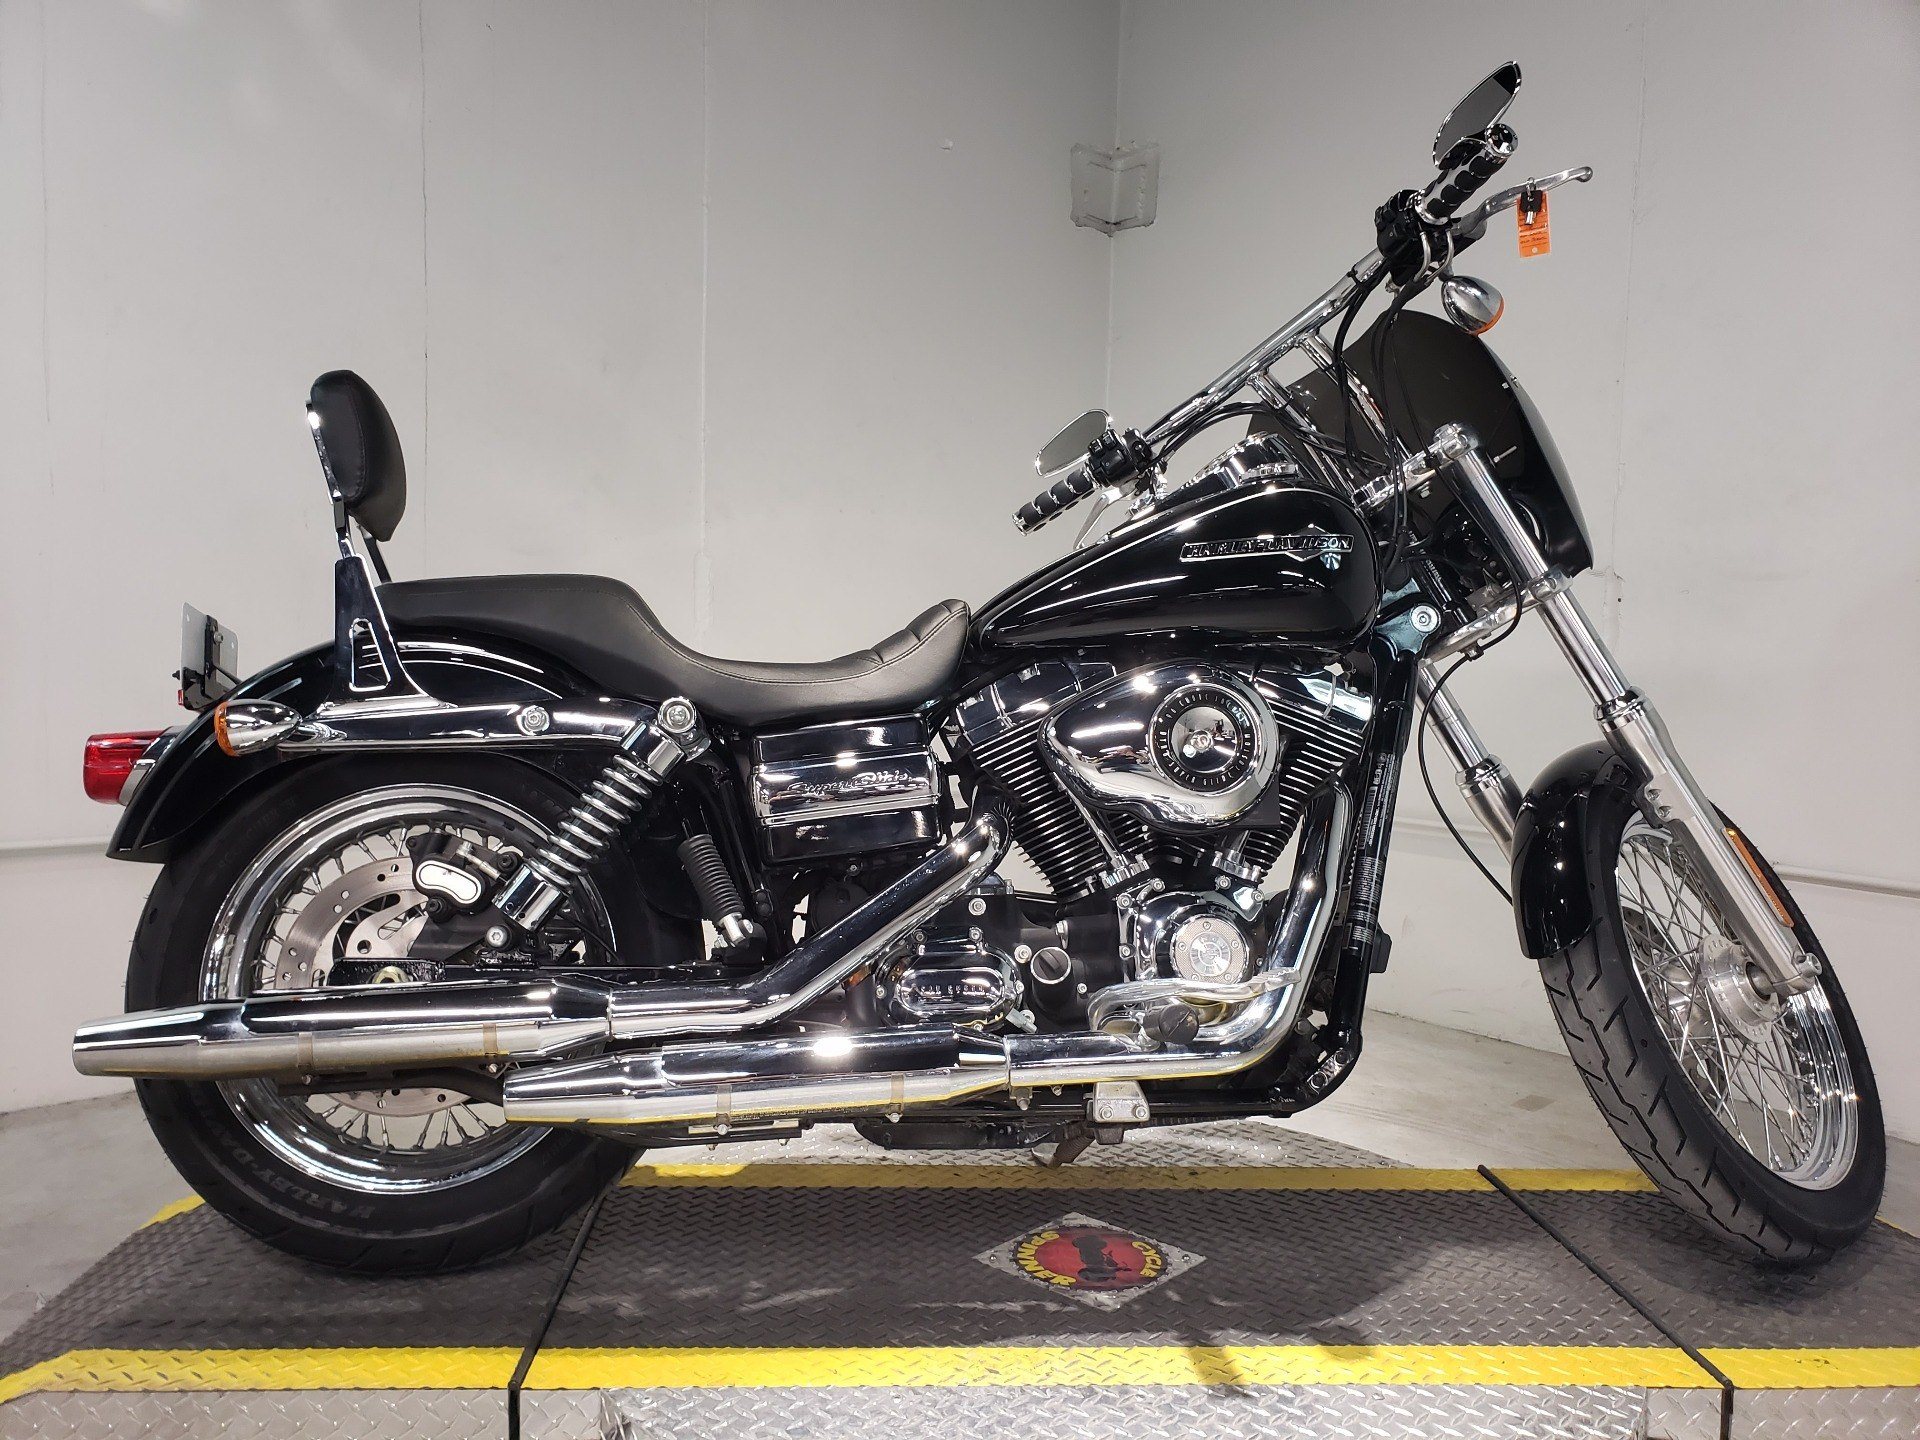 Used 2013 Harley Davidson Dyna Super Glide Custom Vivid Black Motorcycles In Dubuque Ia 332103